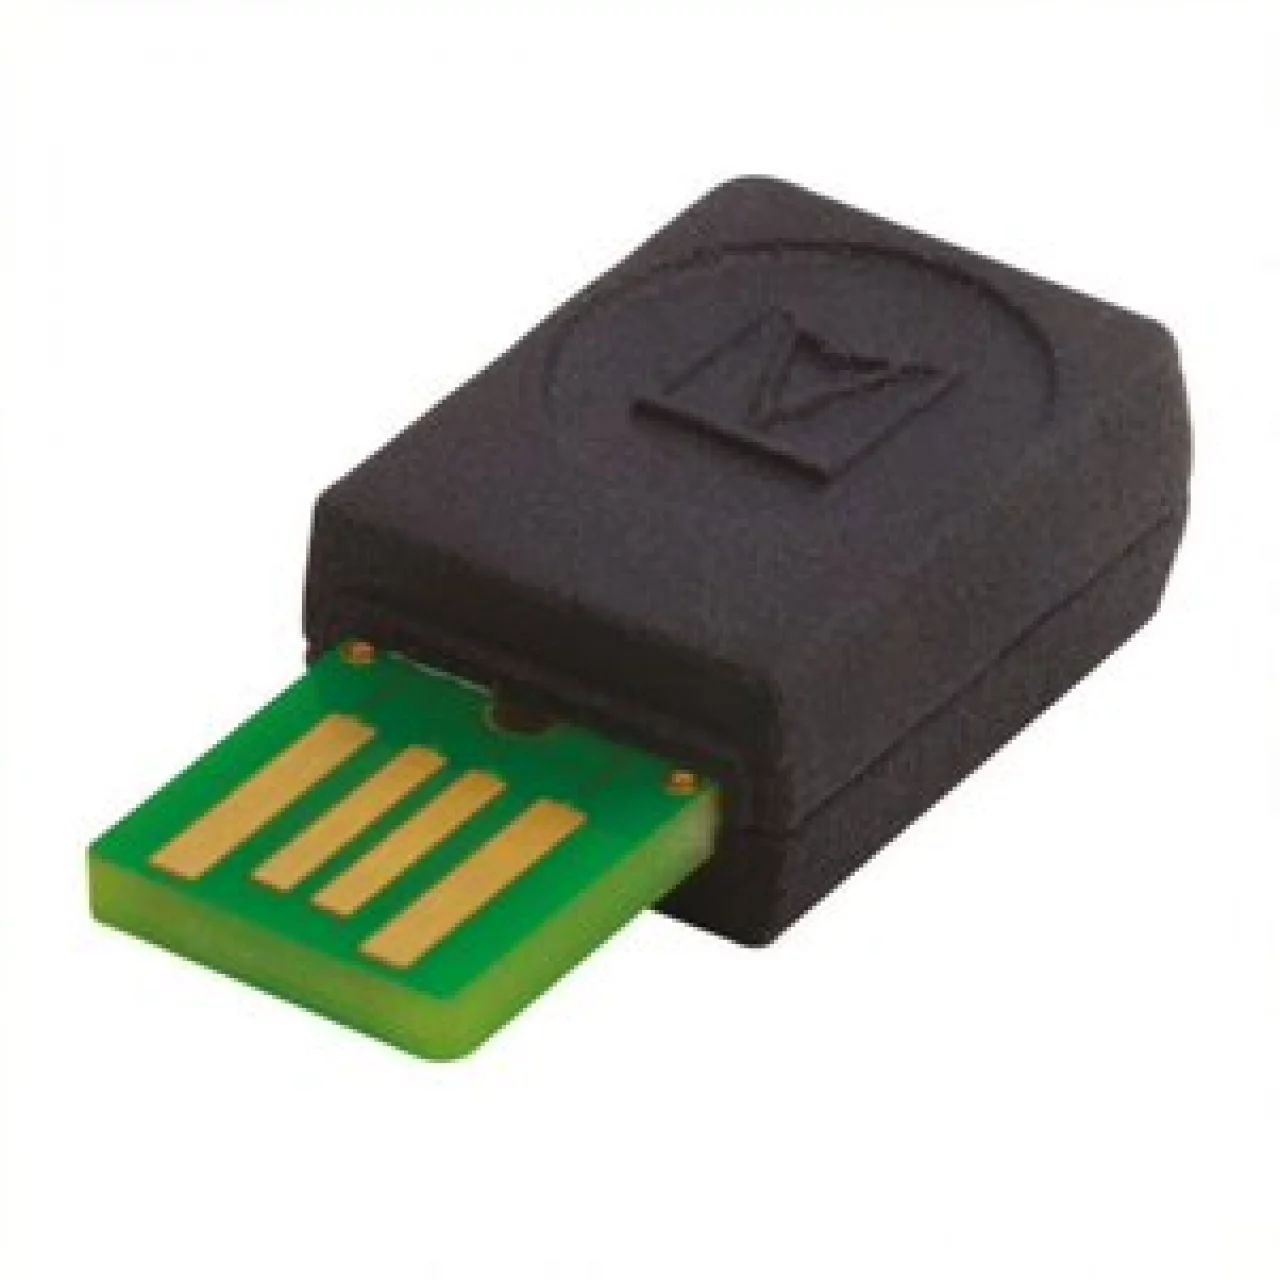 Adaptateur USB Bluetooth Smart - Réf : 1020608 - Béton & Co